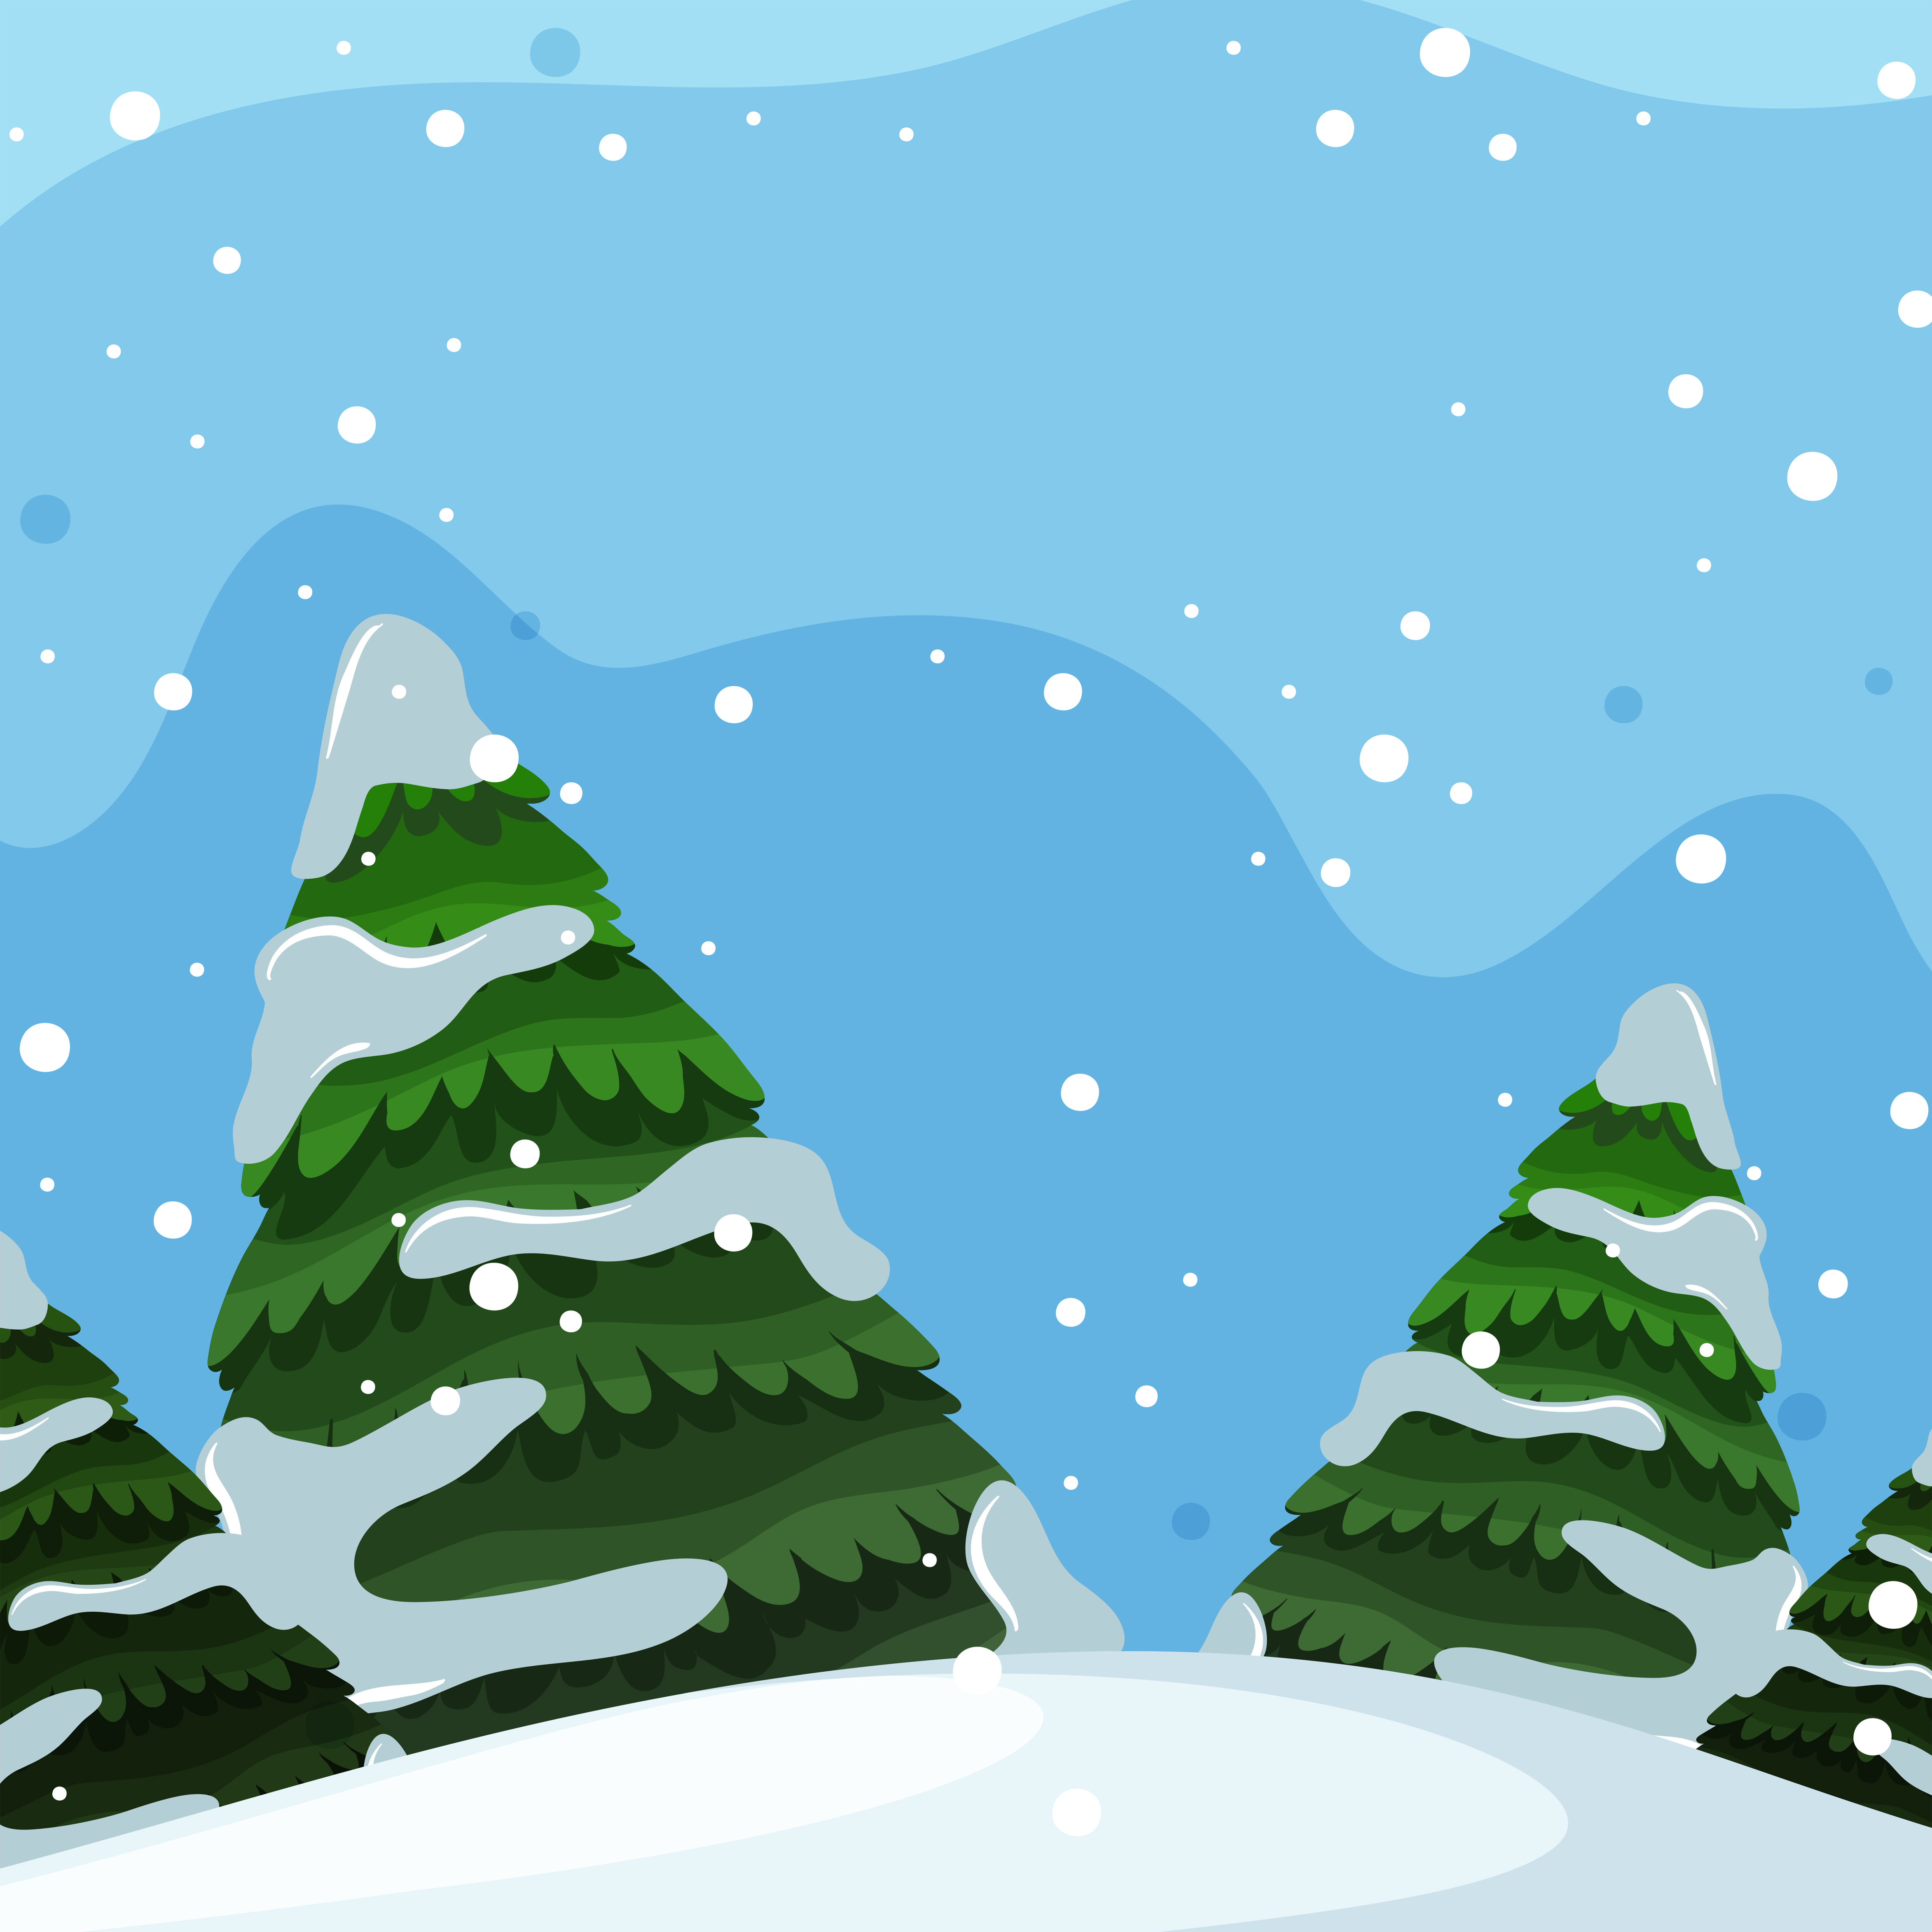 Download Flat design of winter landscape 591514 - Download Free Vectors, Clipart Graphics & Vector Art